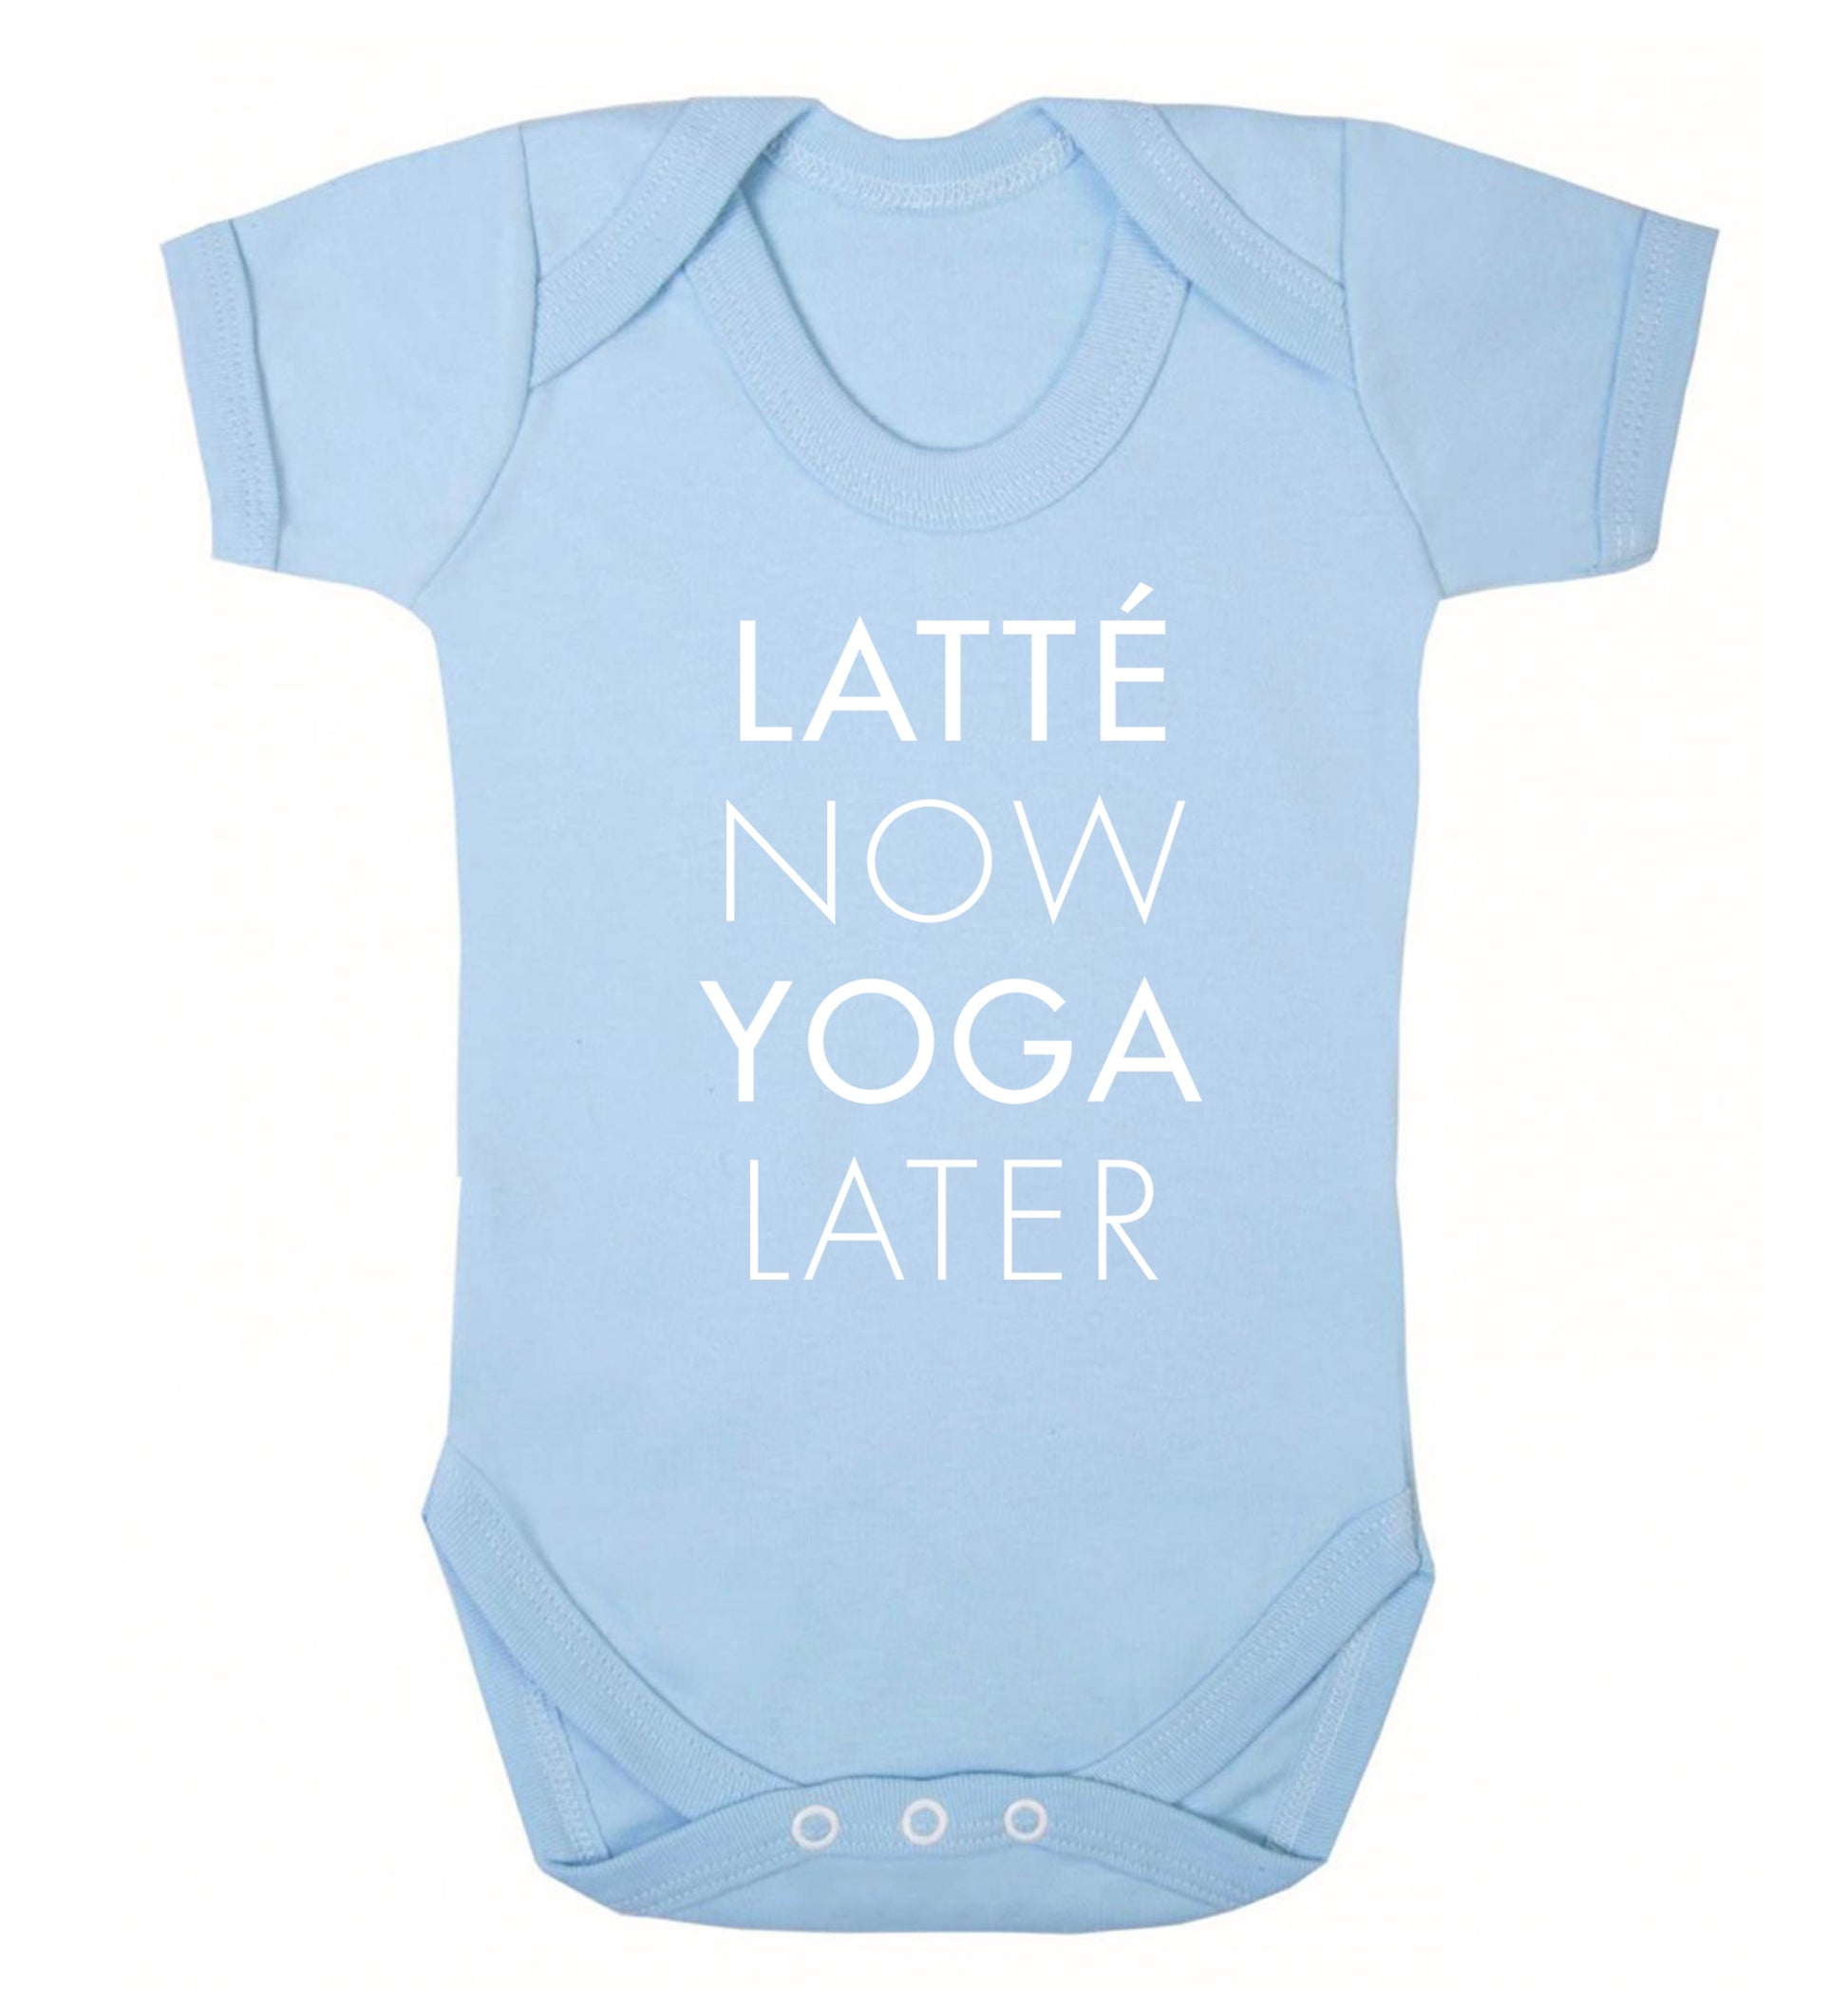 Latte now yoga later Baby Vest pale blue 18-24 months